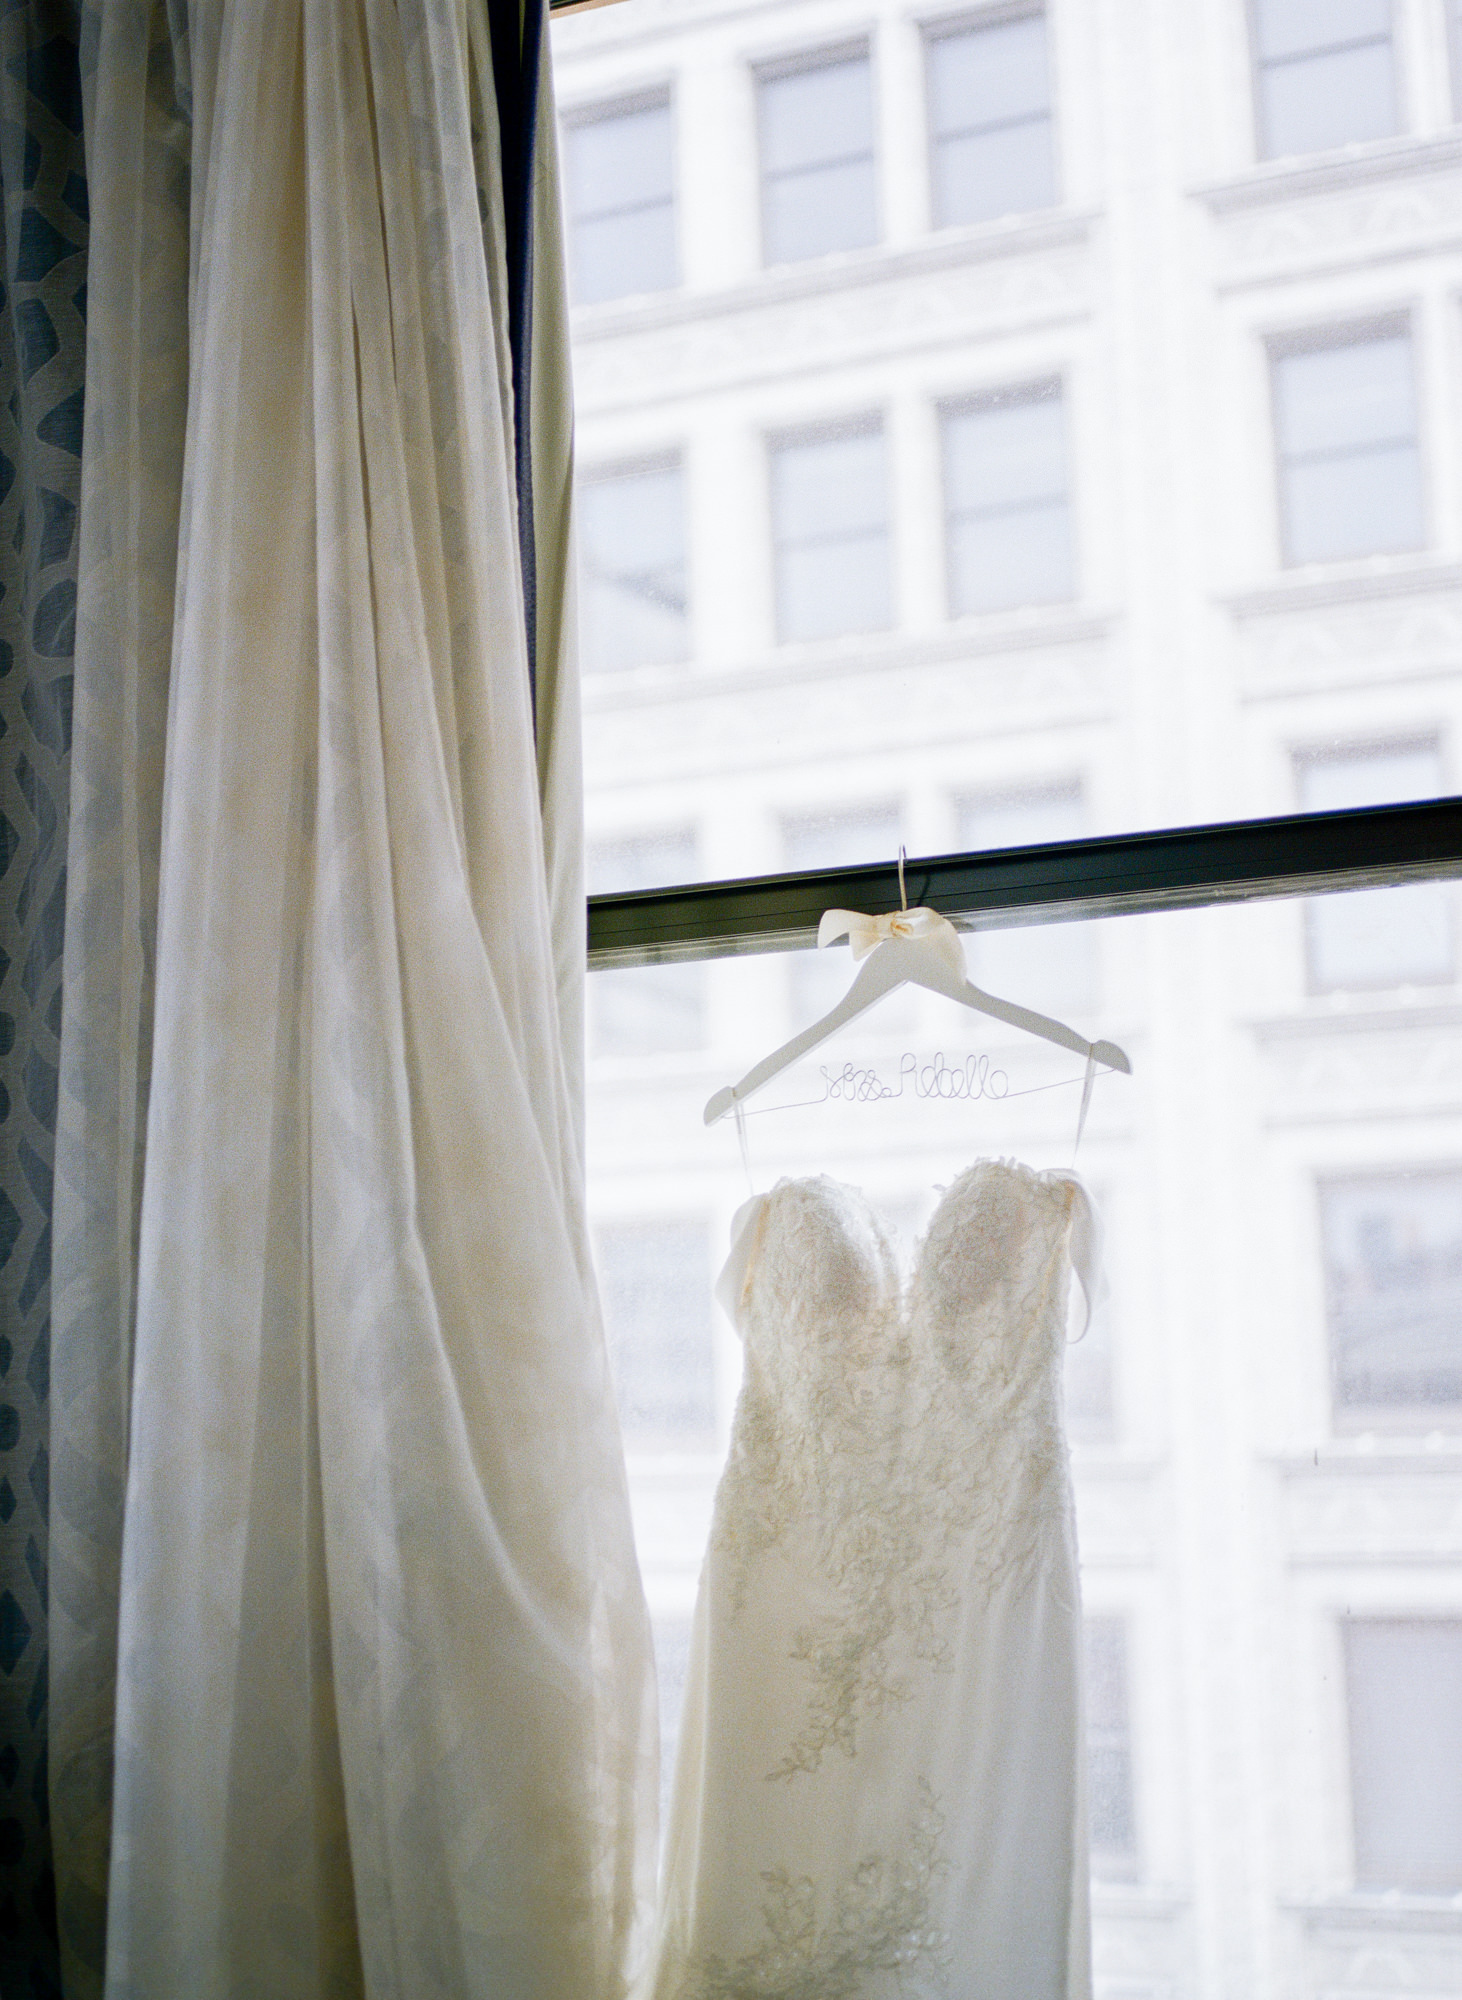 Wedding dress in window of Hotel St. Louis; St. Louis fine art film wedding photographer Erica Robnett Photography